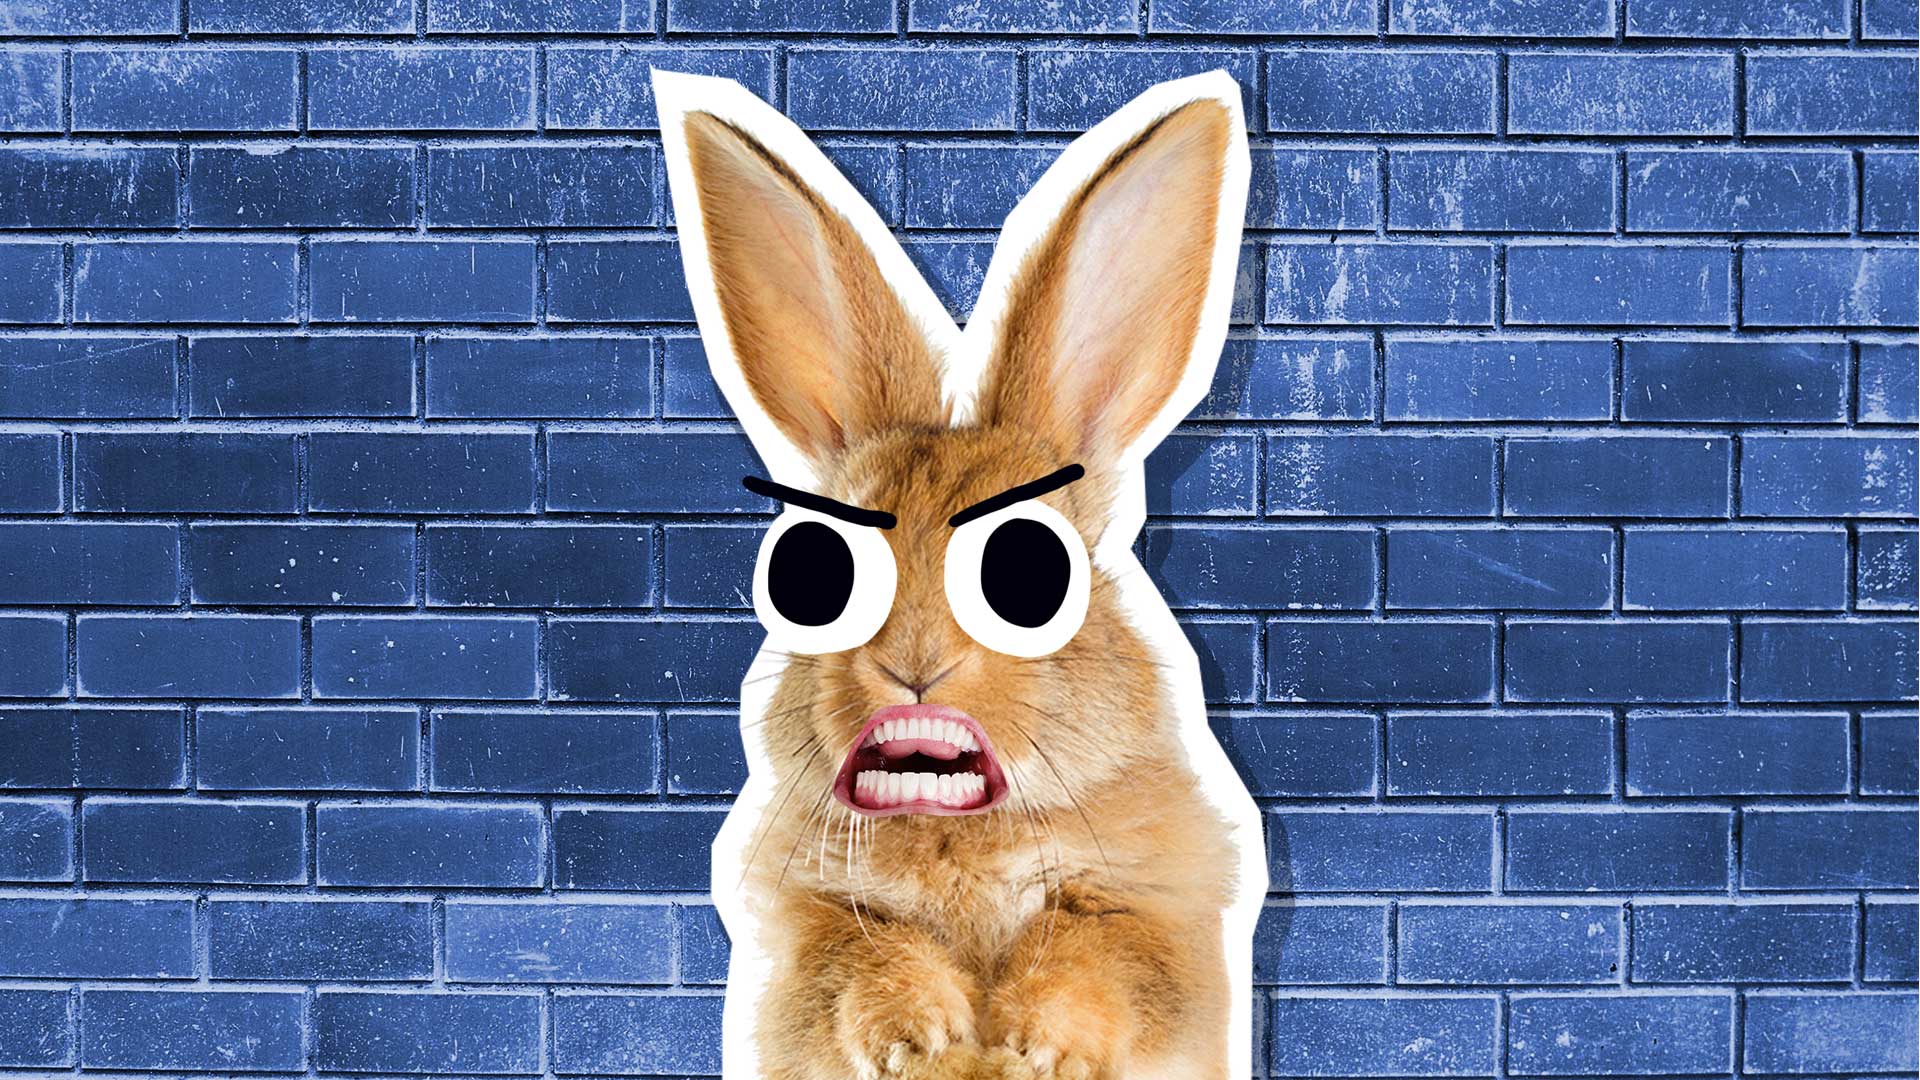 An annoyed rabbit